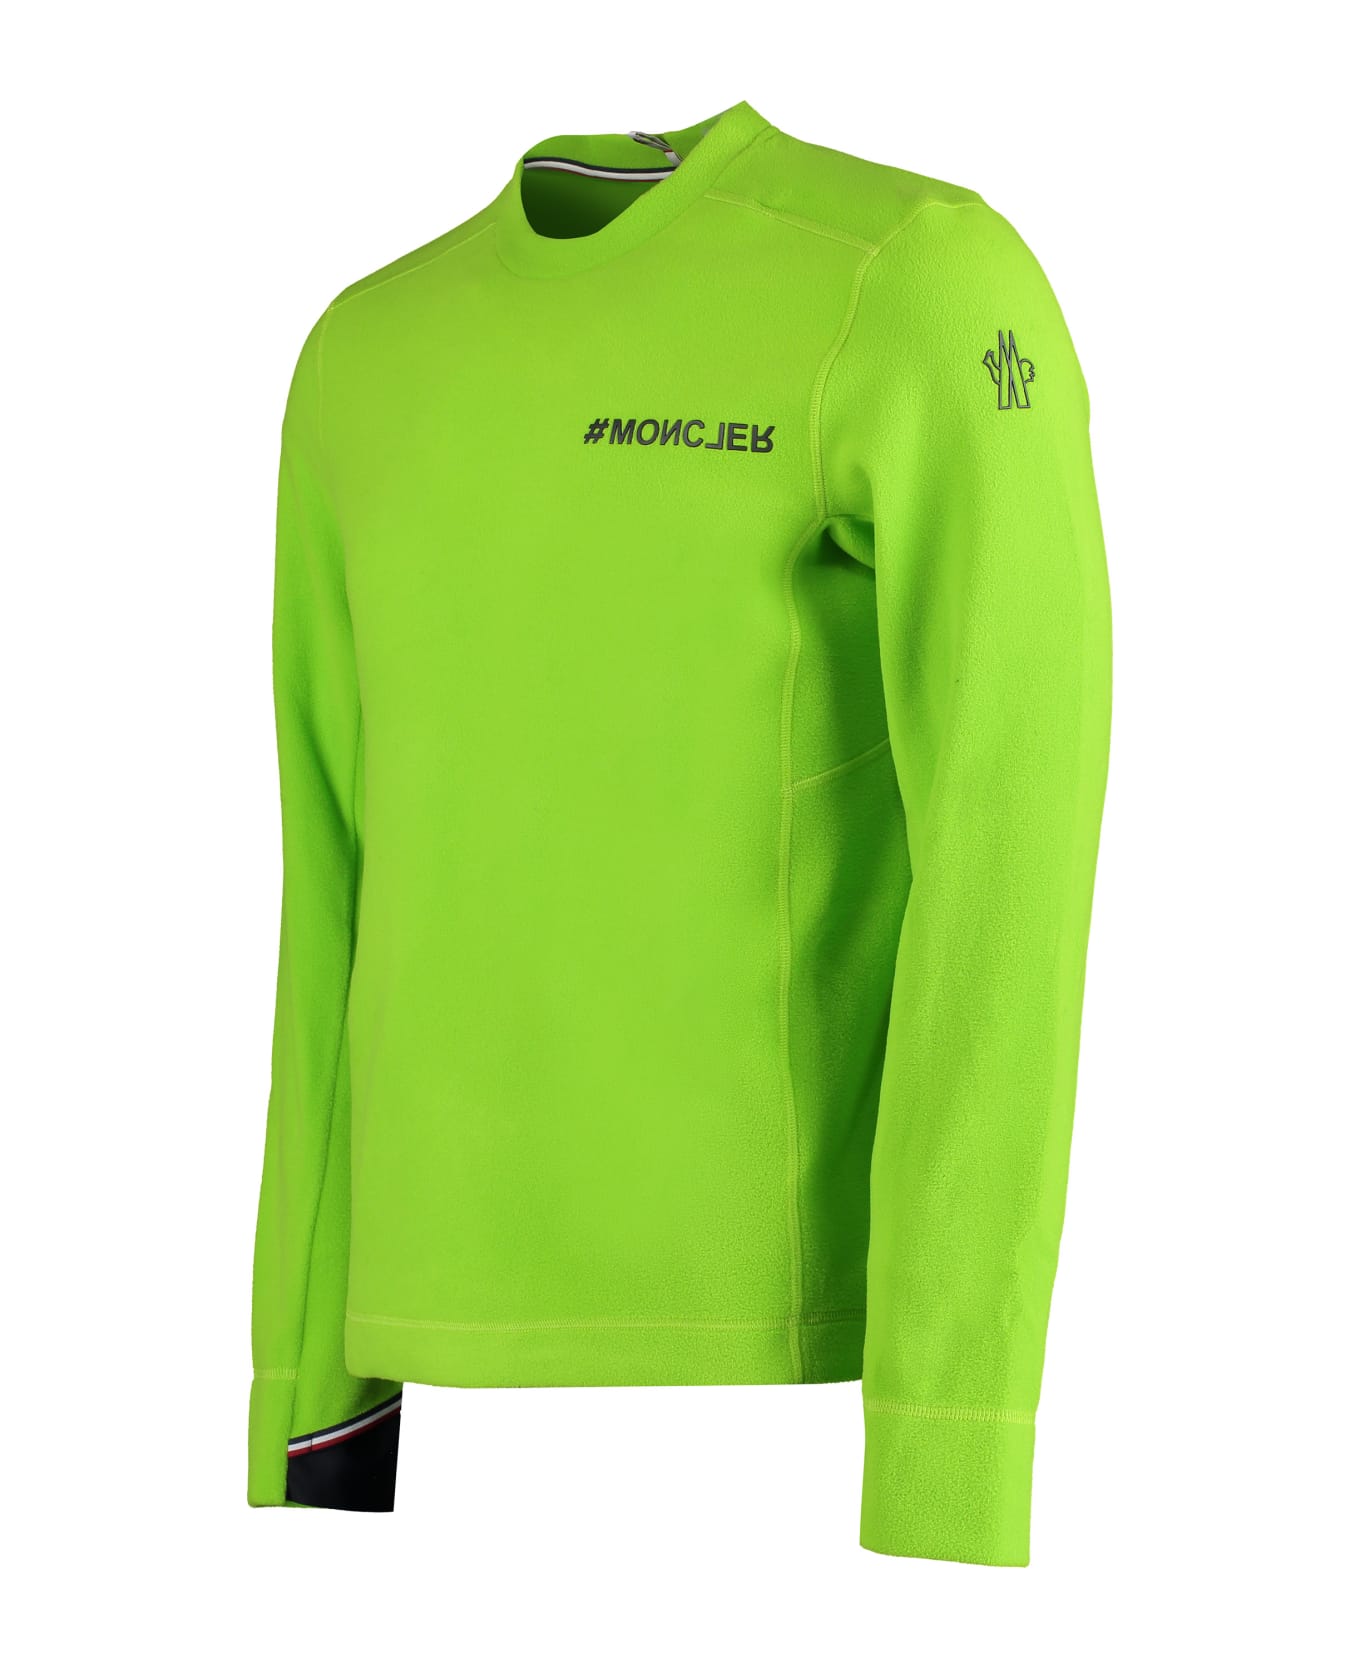 Moncler Grenoble Fleece Sweatshirt - Green